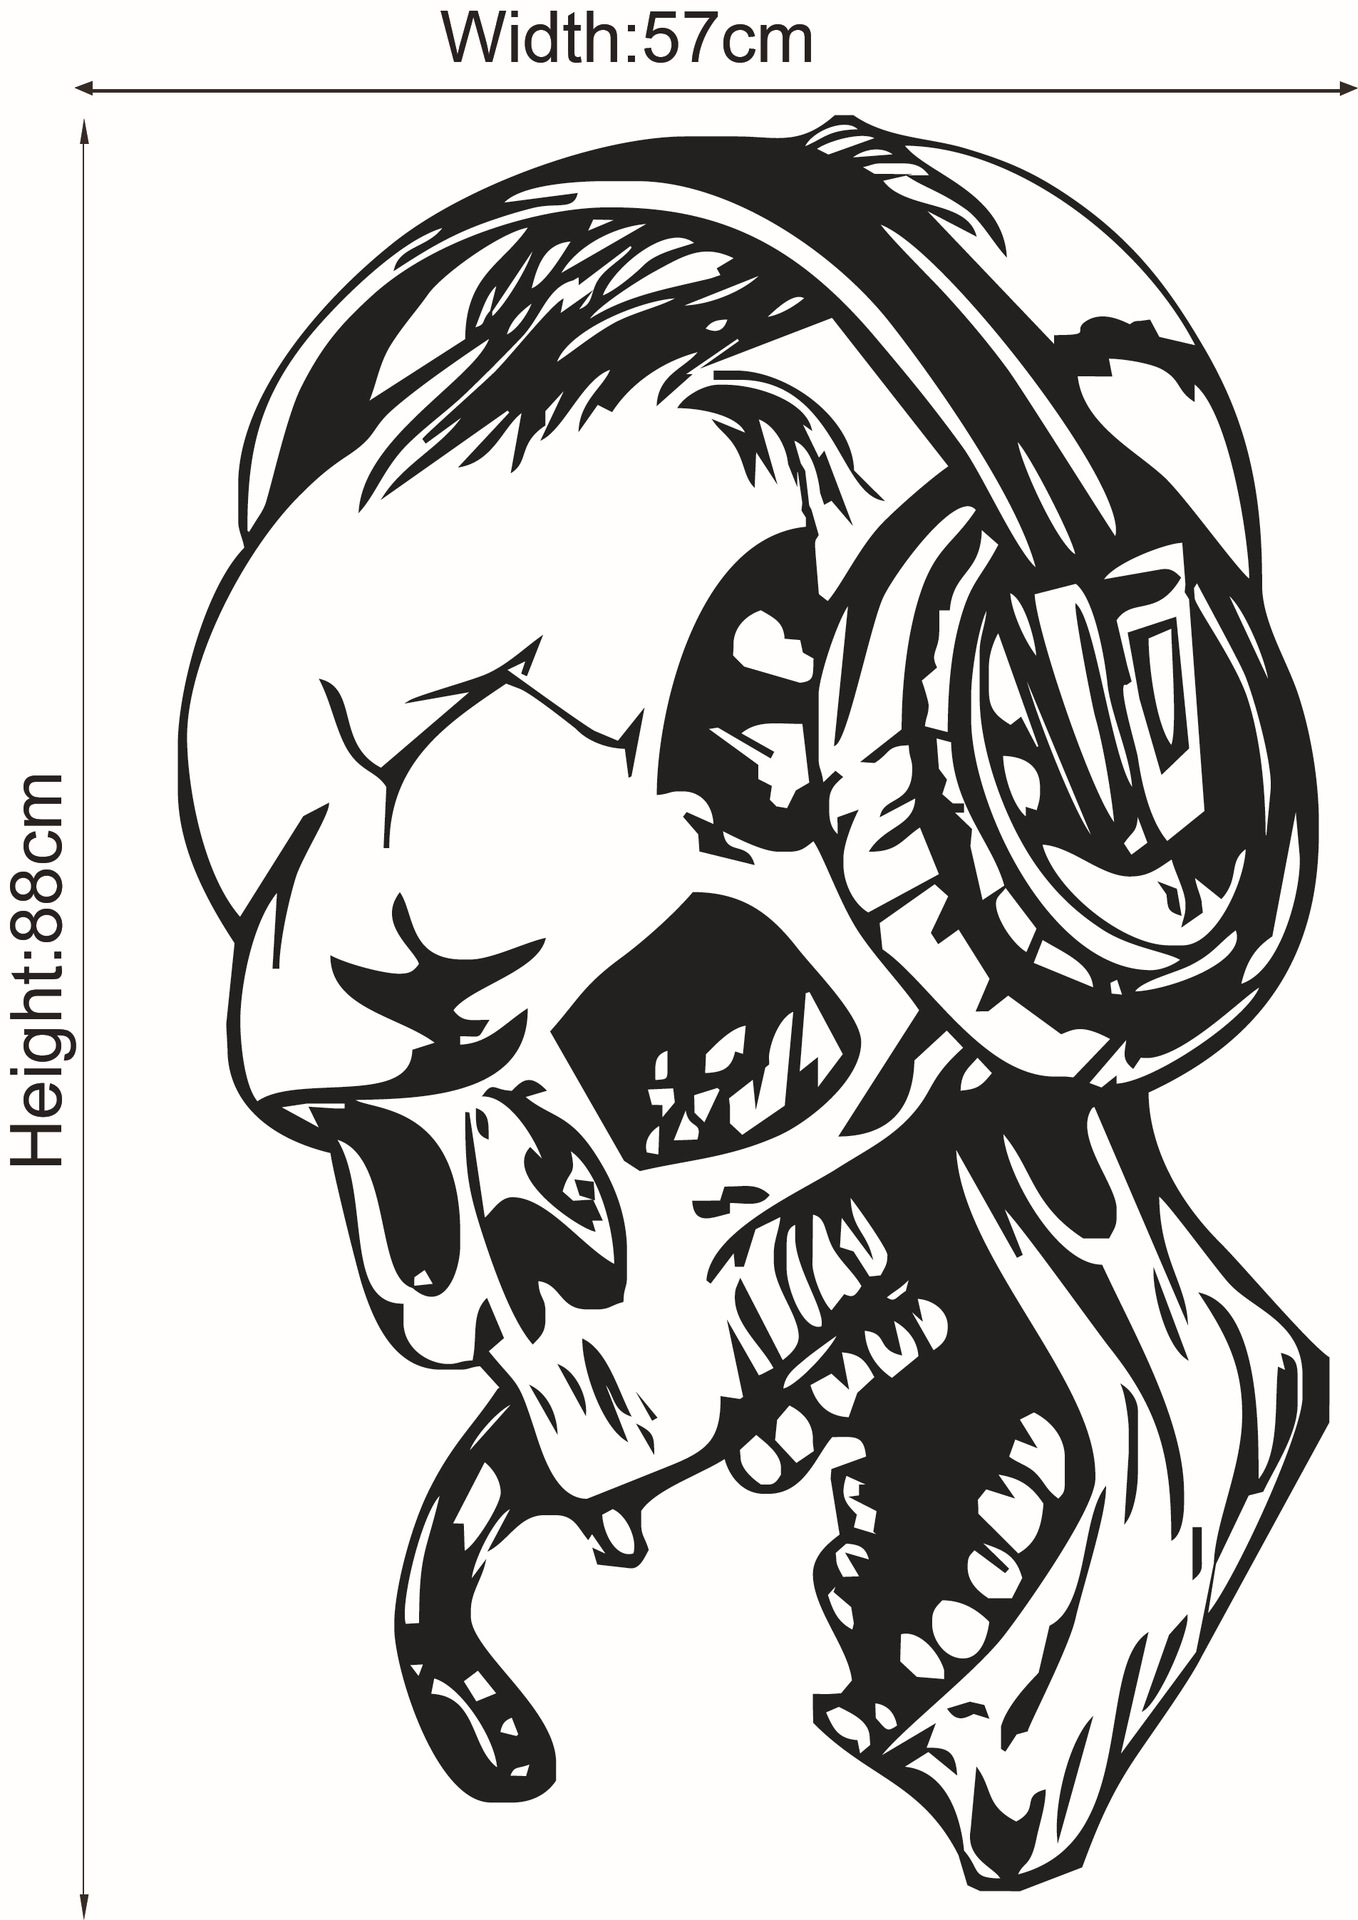 Hallowen-Skull-Head-Showcase-Glass-Window-Decor-Wall-Sticker-Party-House-Home-Decoration-Creative-De-1227348-6